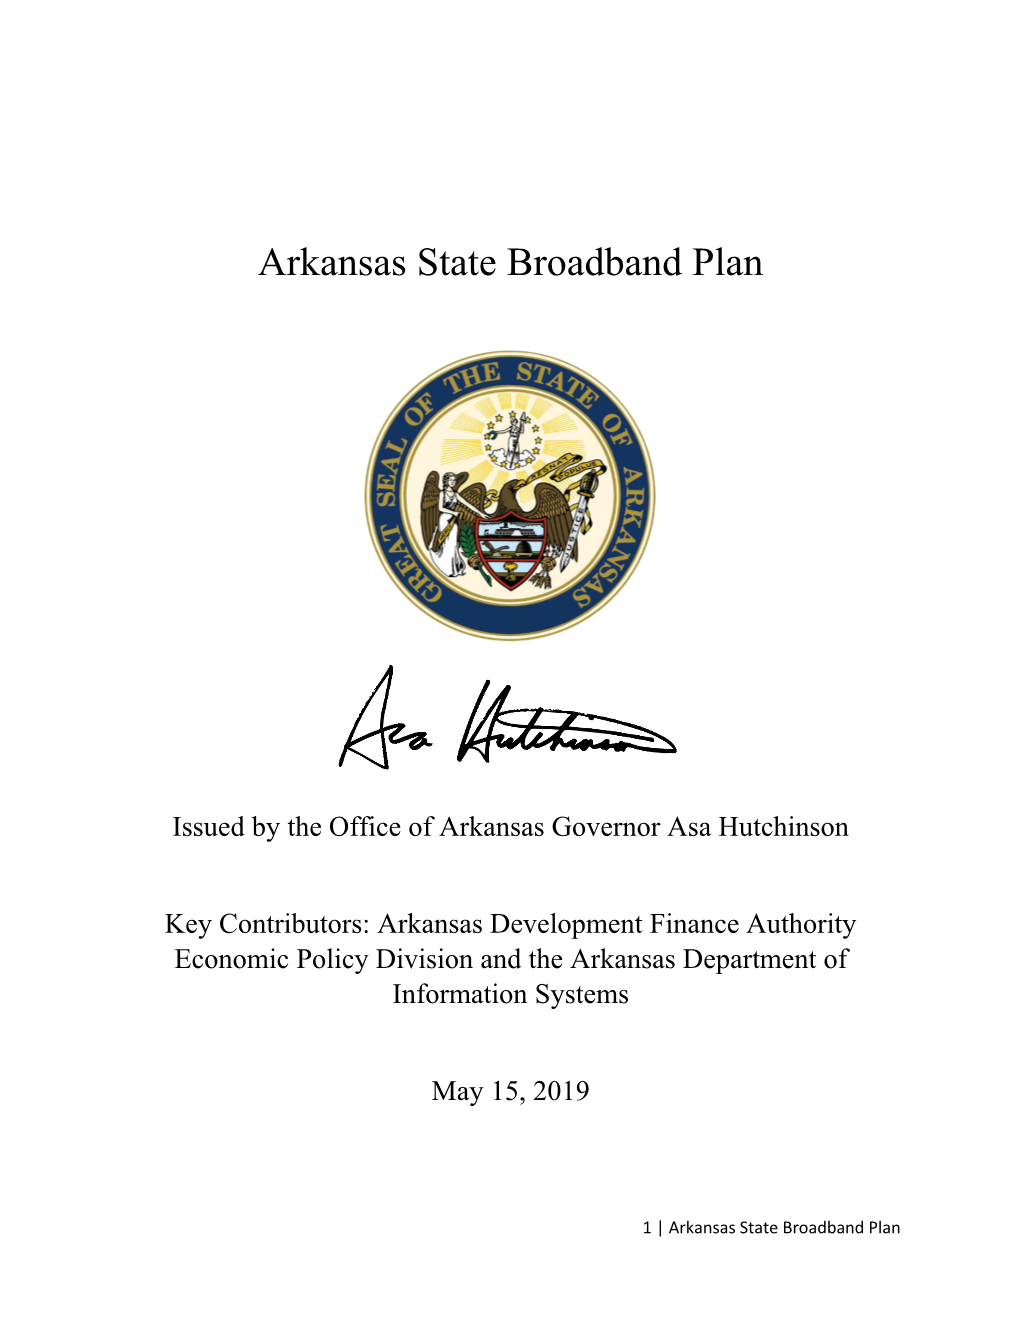 State Broadband Plan